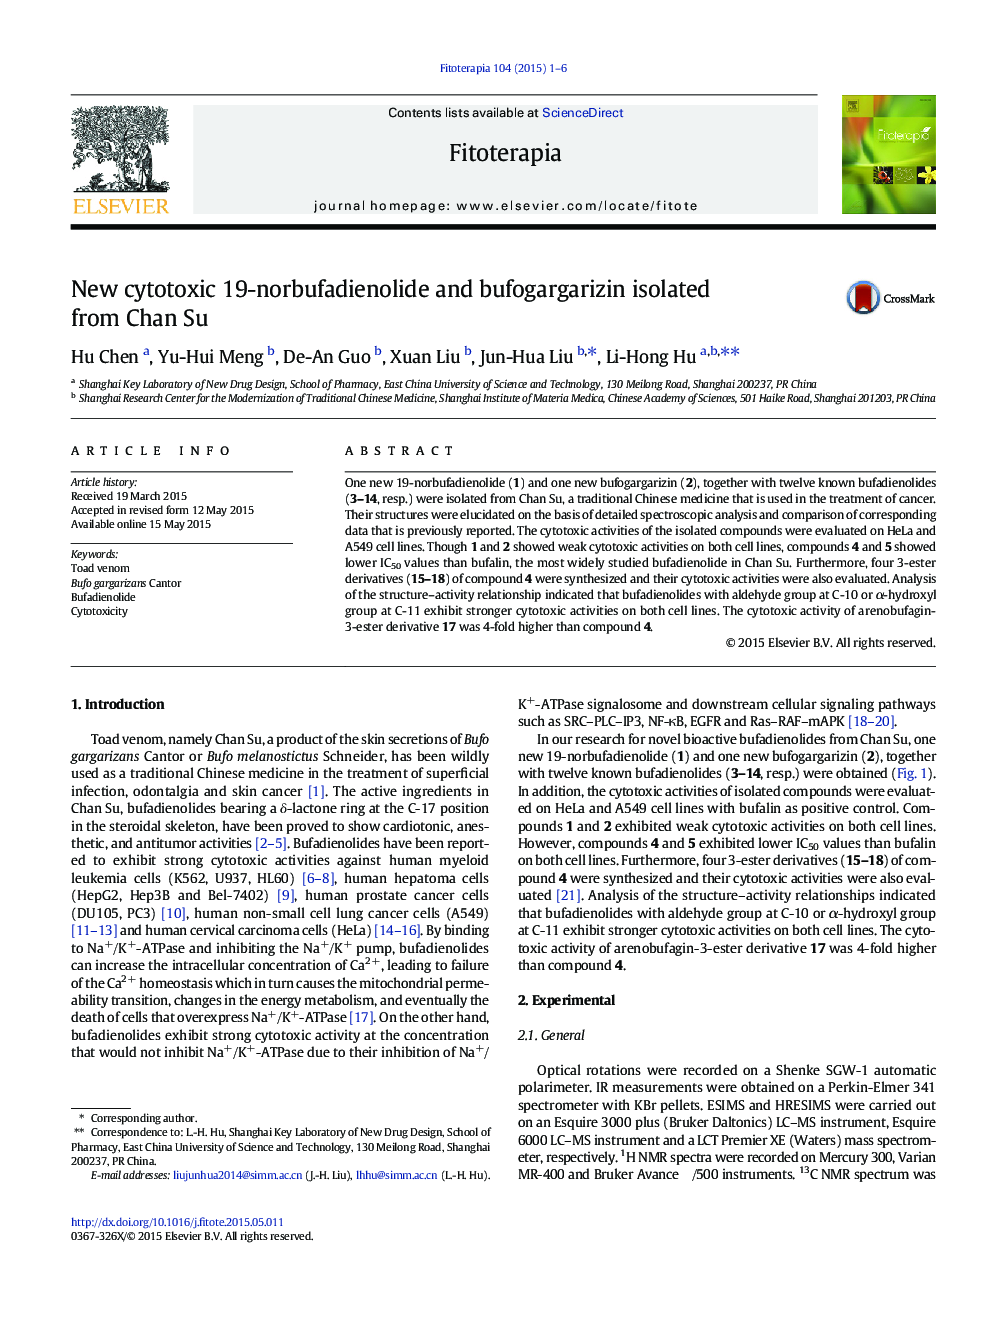 New cytotoxic 19-norbufadienolide and bufogargarizin isolated from Chan Su